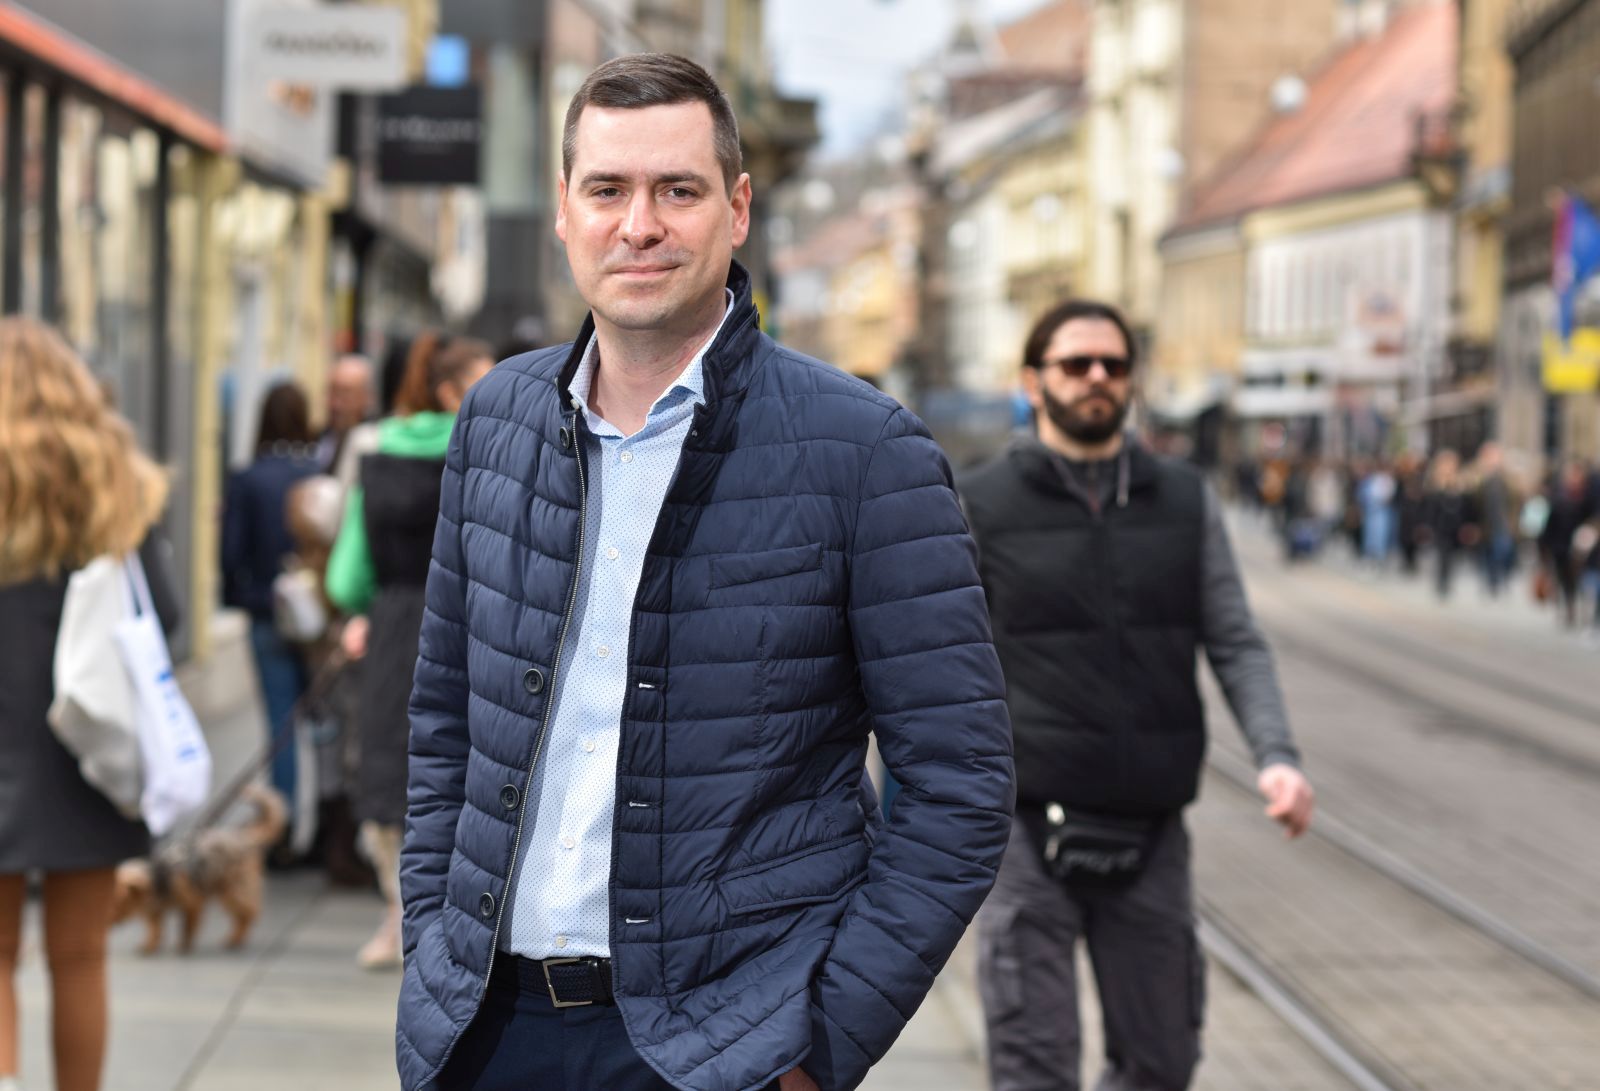 06.02.2021., Zagreb - Mislav Herman, predsjednik zagrebacke Gradske skupstine. 

Photo: Sasa Zinaja/NFoto